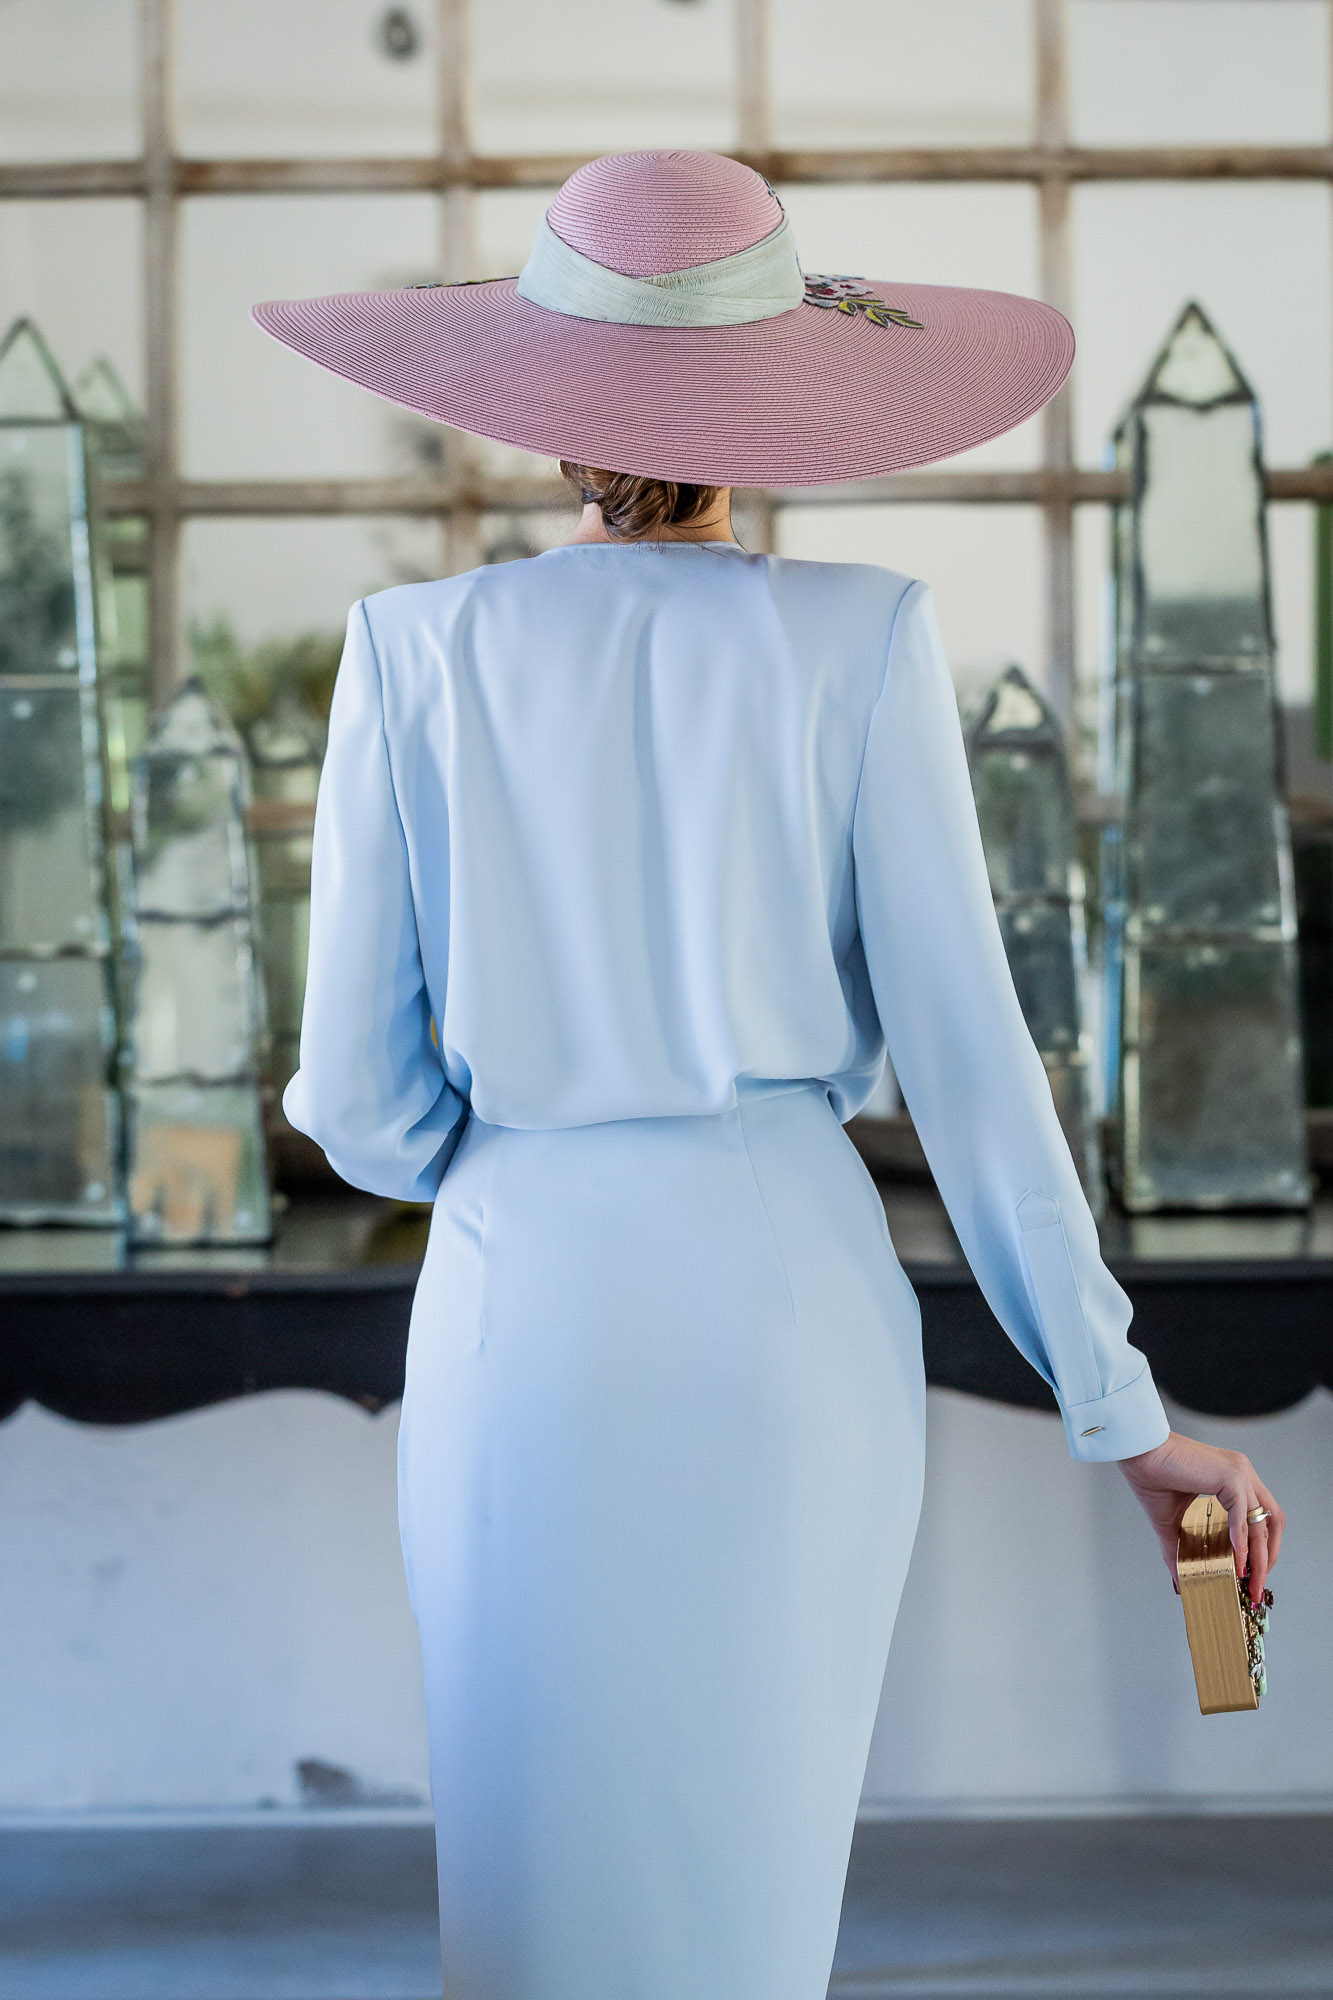 Look invitada boda 2019 vestido azul comunion pamela lila